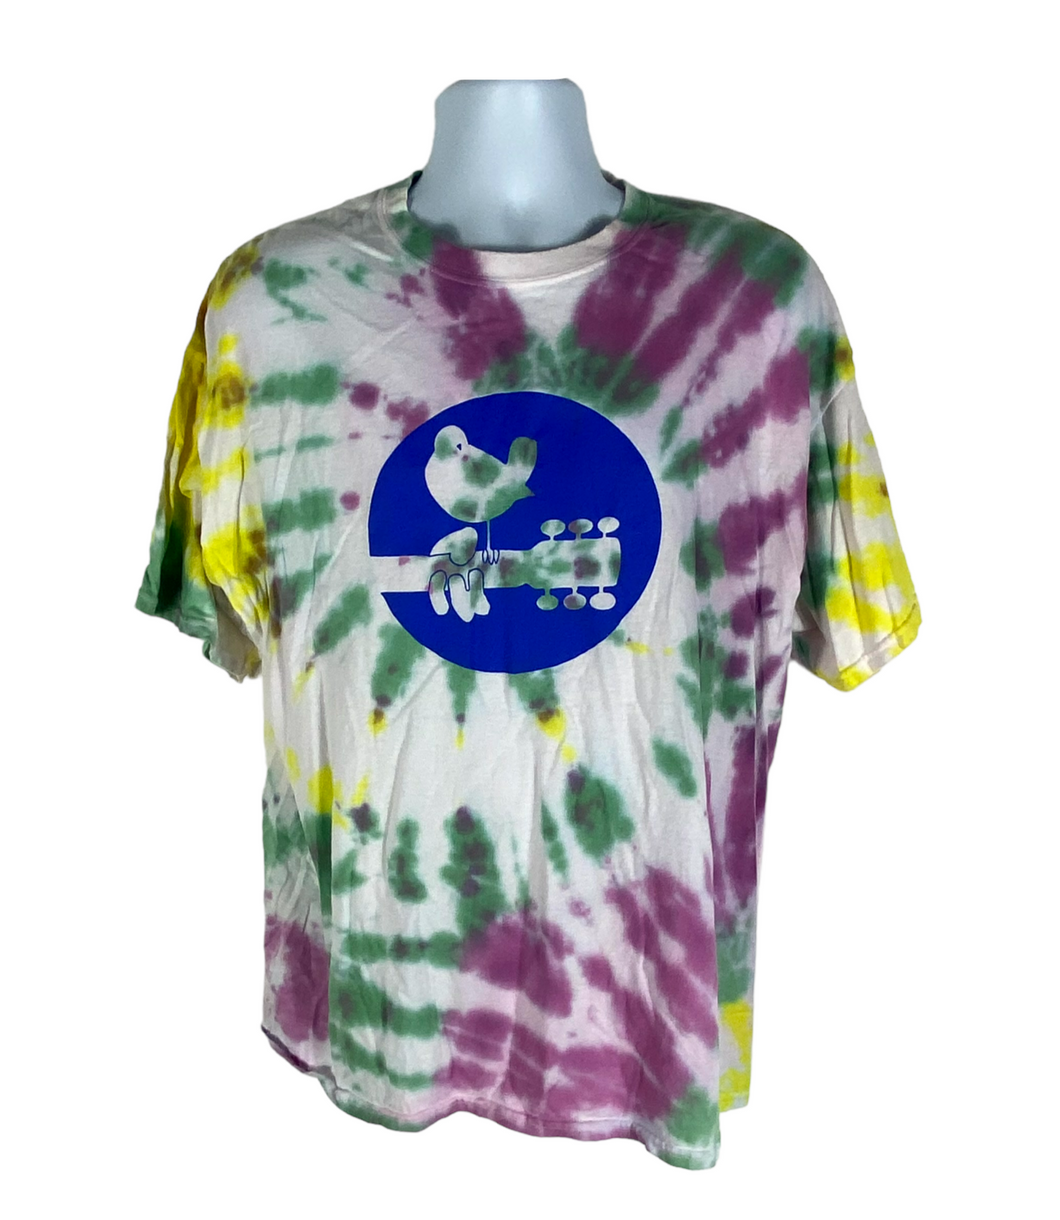 Woodstock Spiral Tie Dye T-Shirt - XL